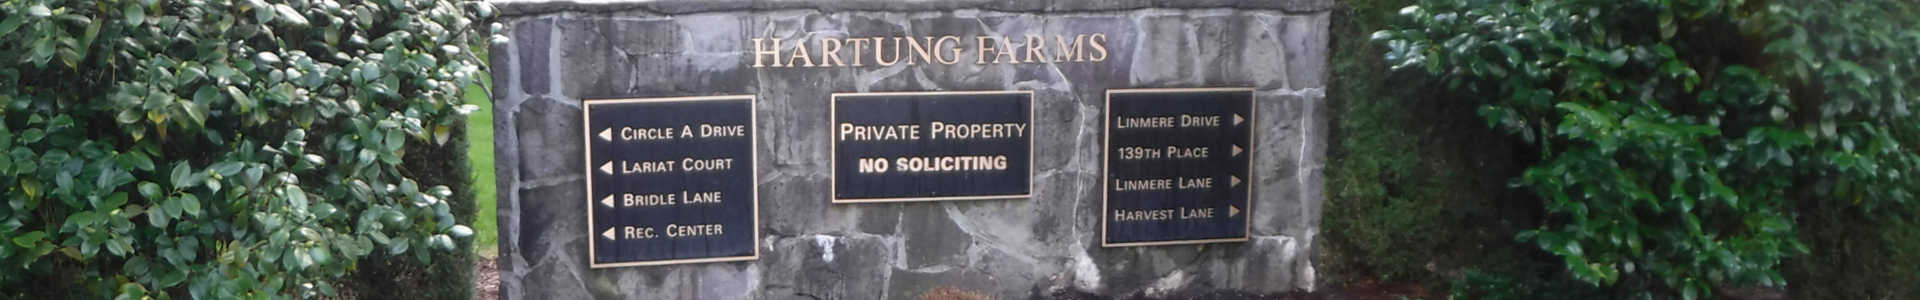 Hartung Farms Sign